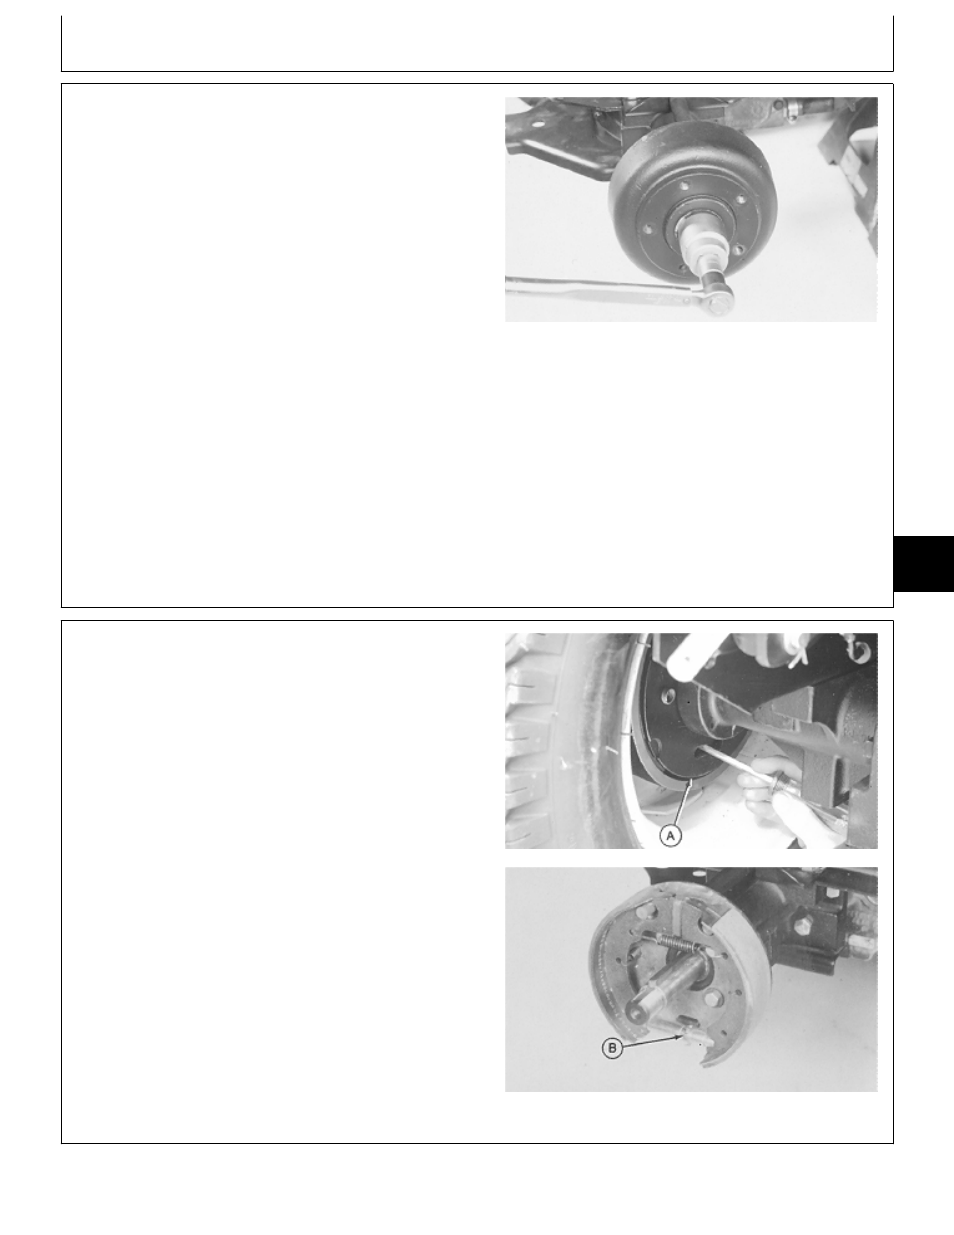 Adjust brakes | John Deere 318 User Manual | Page 179 / 440